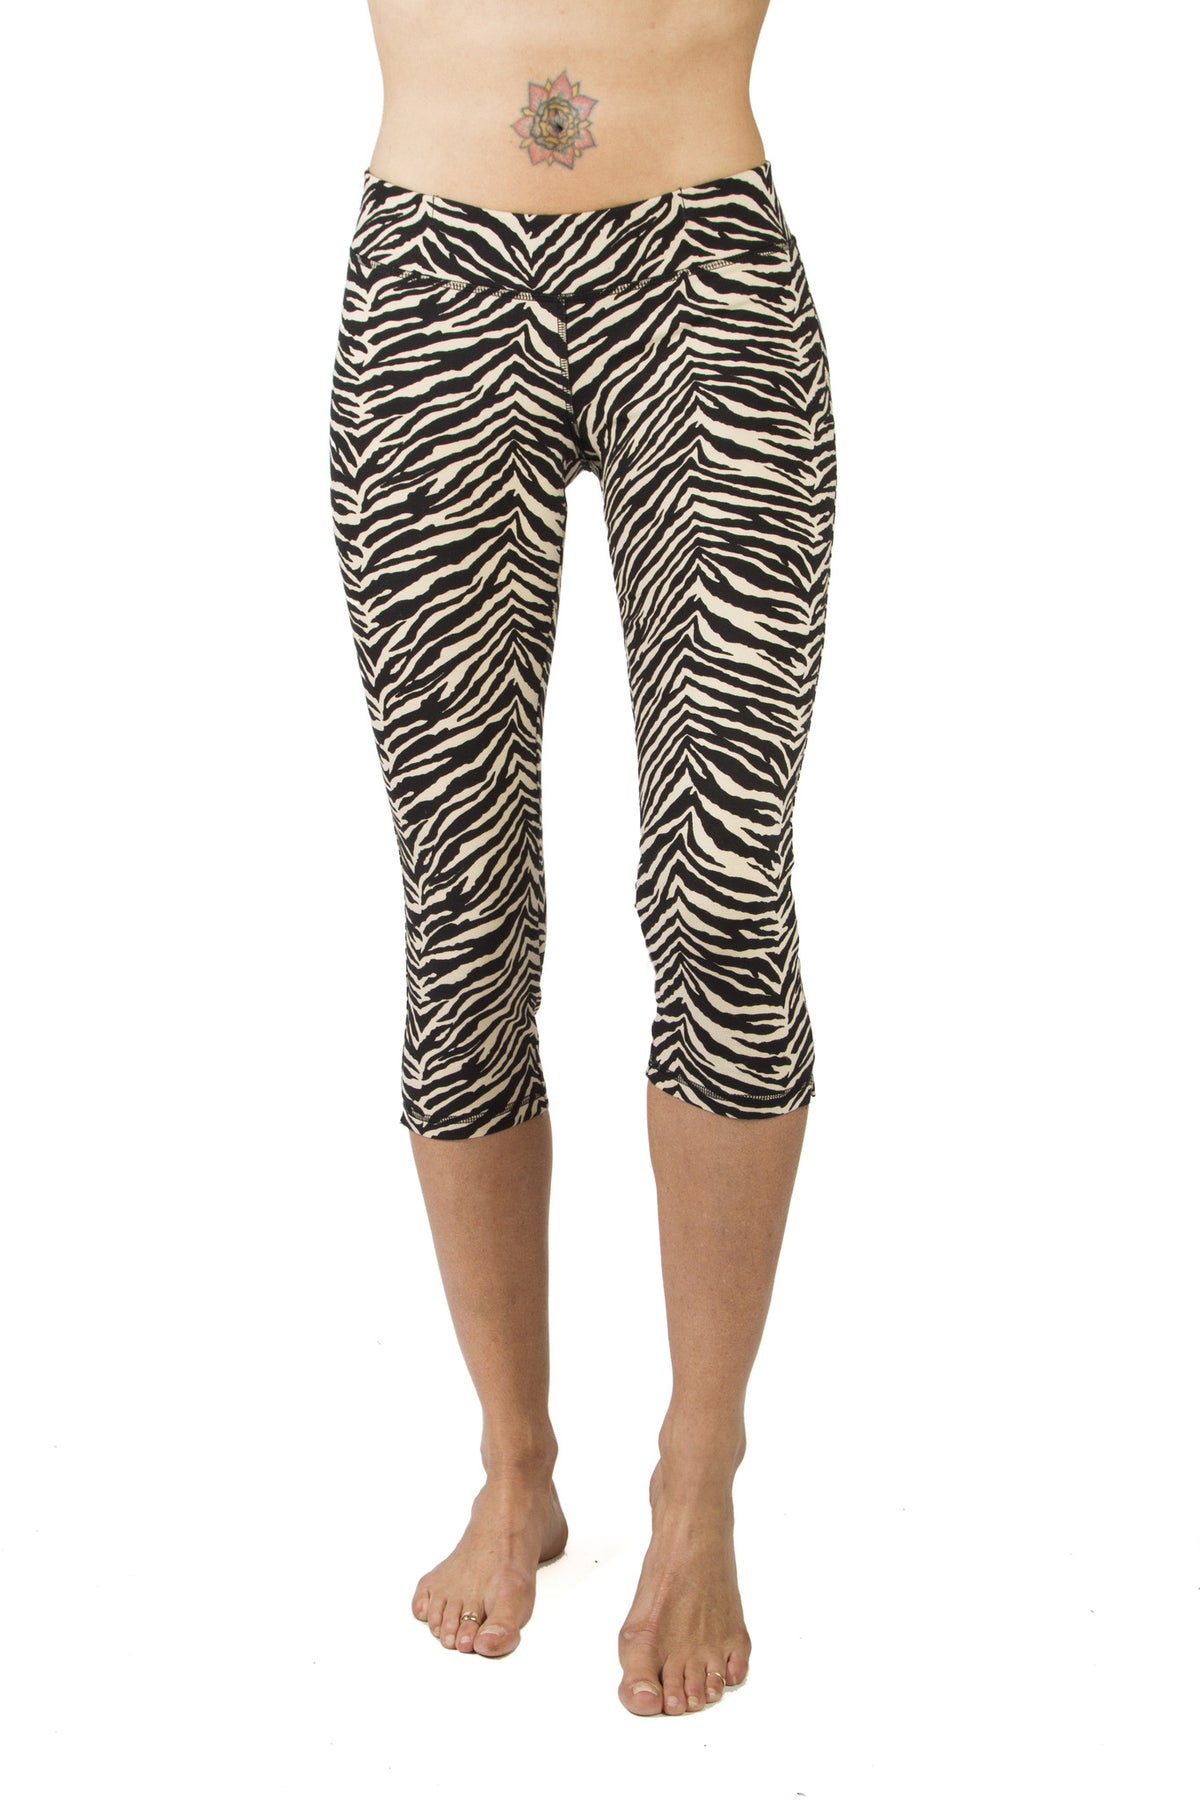 Capri Tights - Zebra Cream Black - FUNKY SIMPLICITY